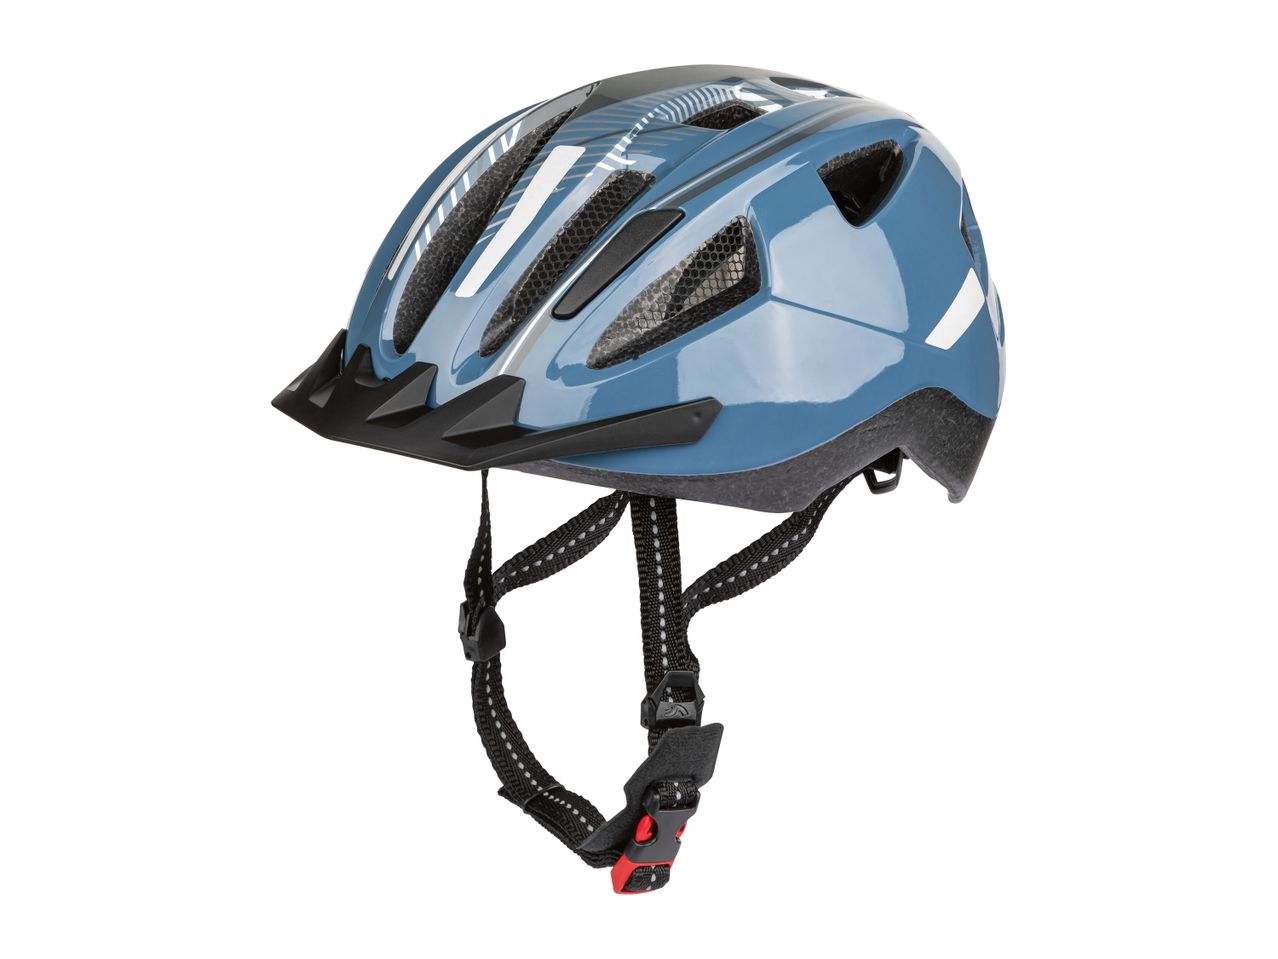 Go to full screen view: Crivit Bike Helmet with Rear Light - Image 2